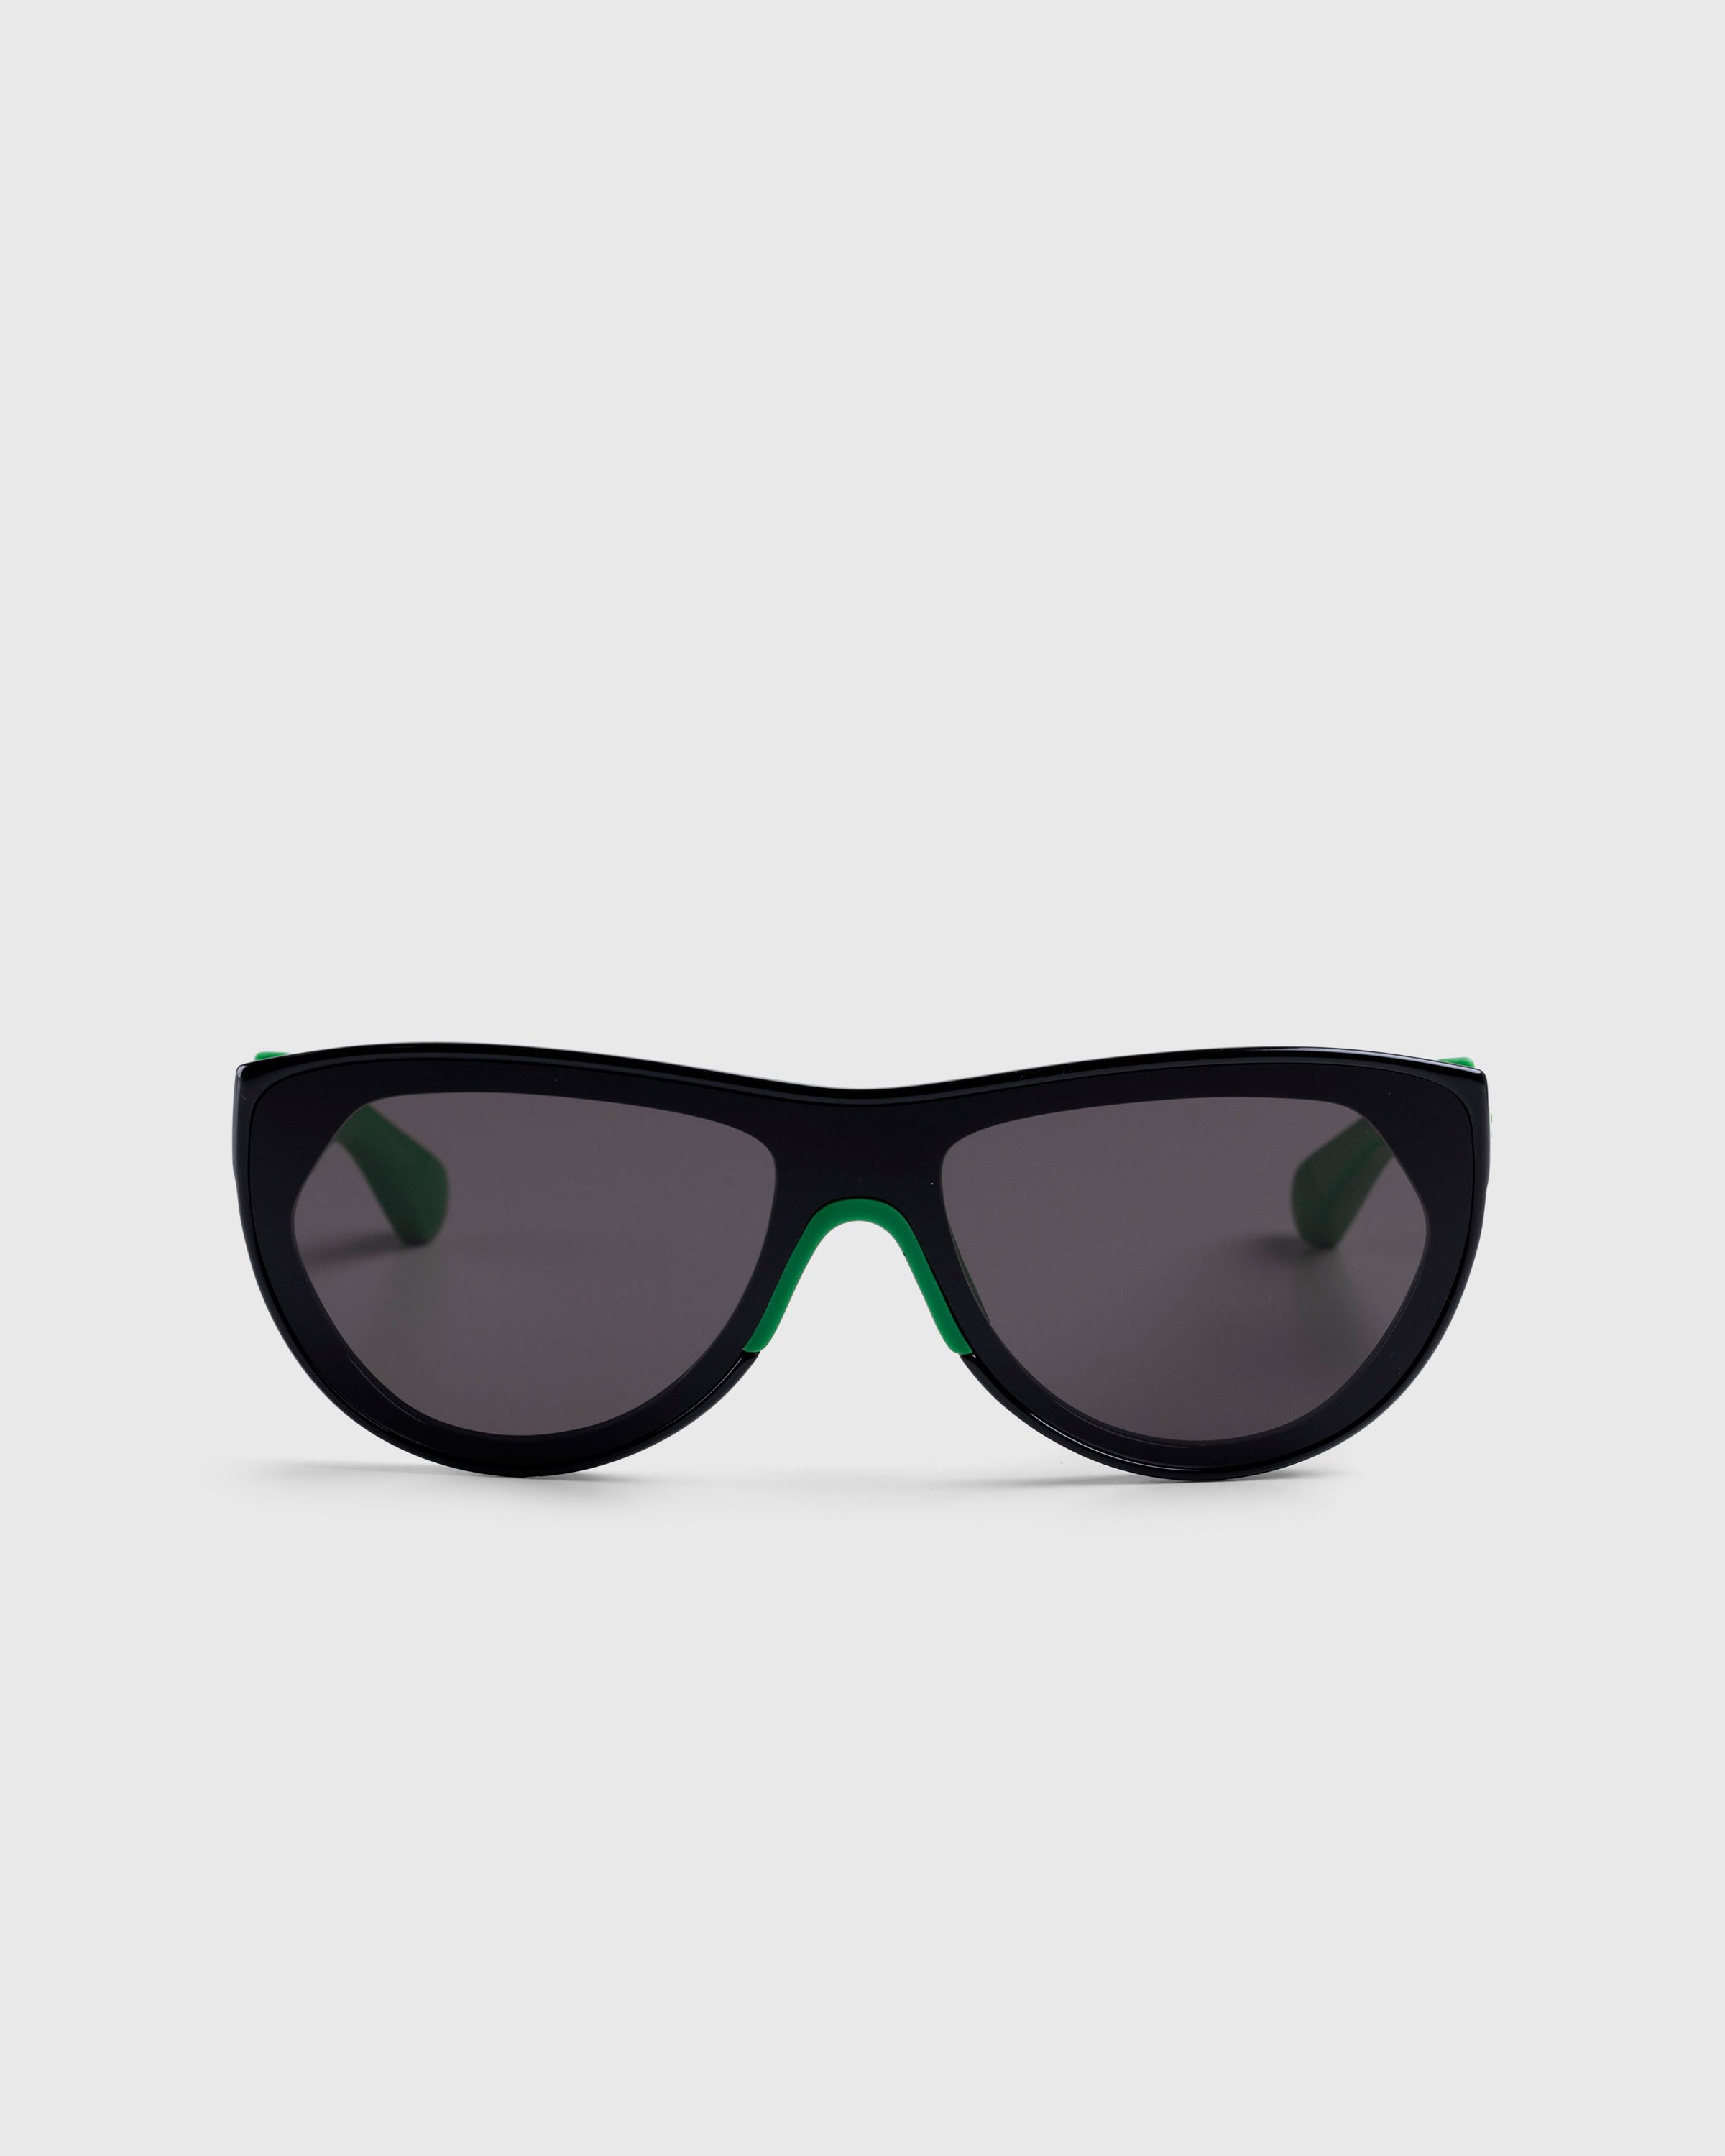 Bottega Veneta - Mitre Square Rounded Injected Acetate Sunglasses Black/Green - Accessories - Black - Image 1